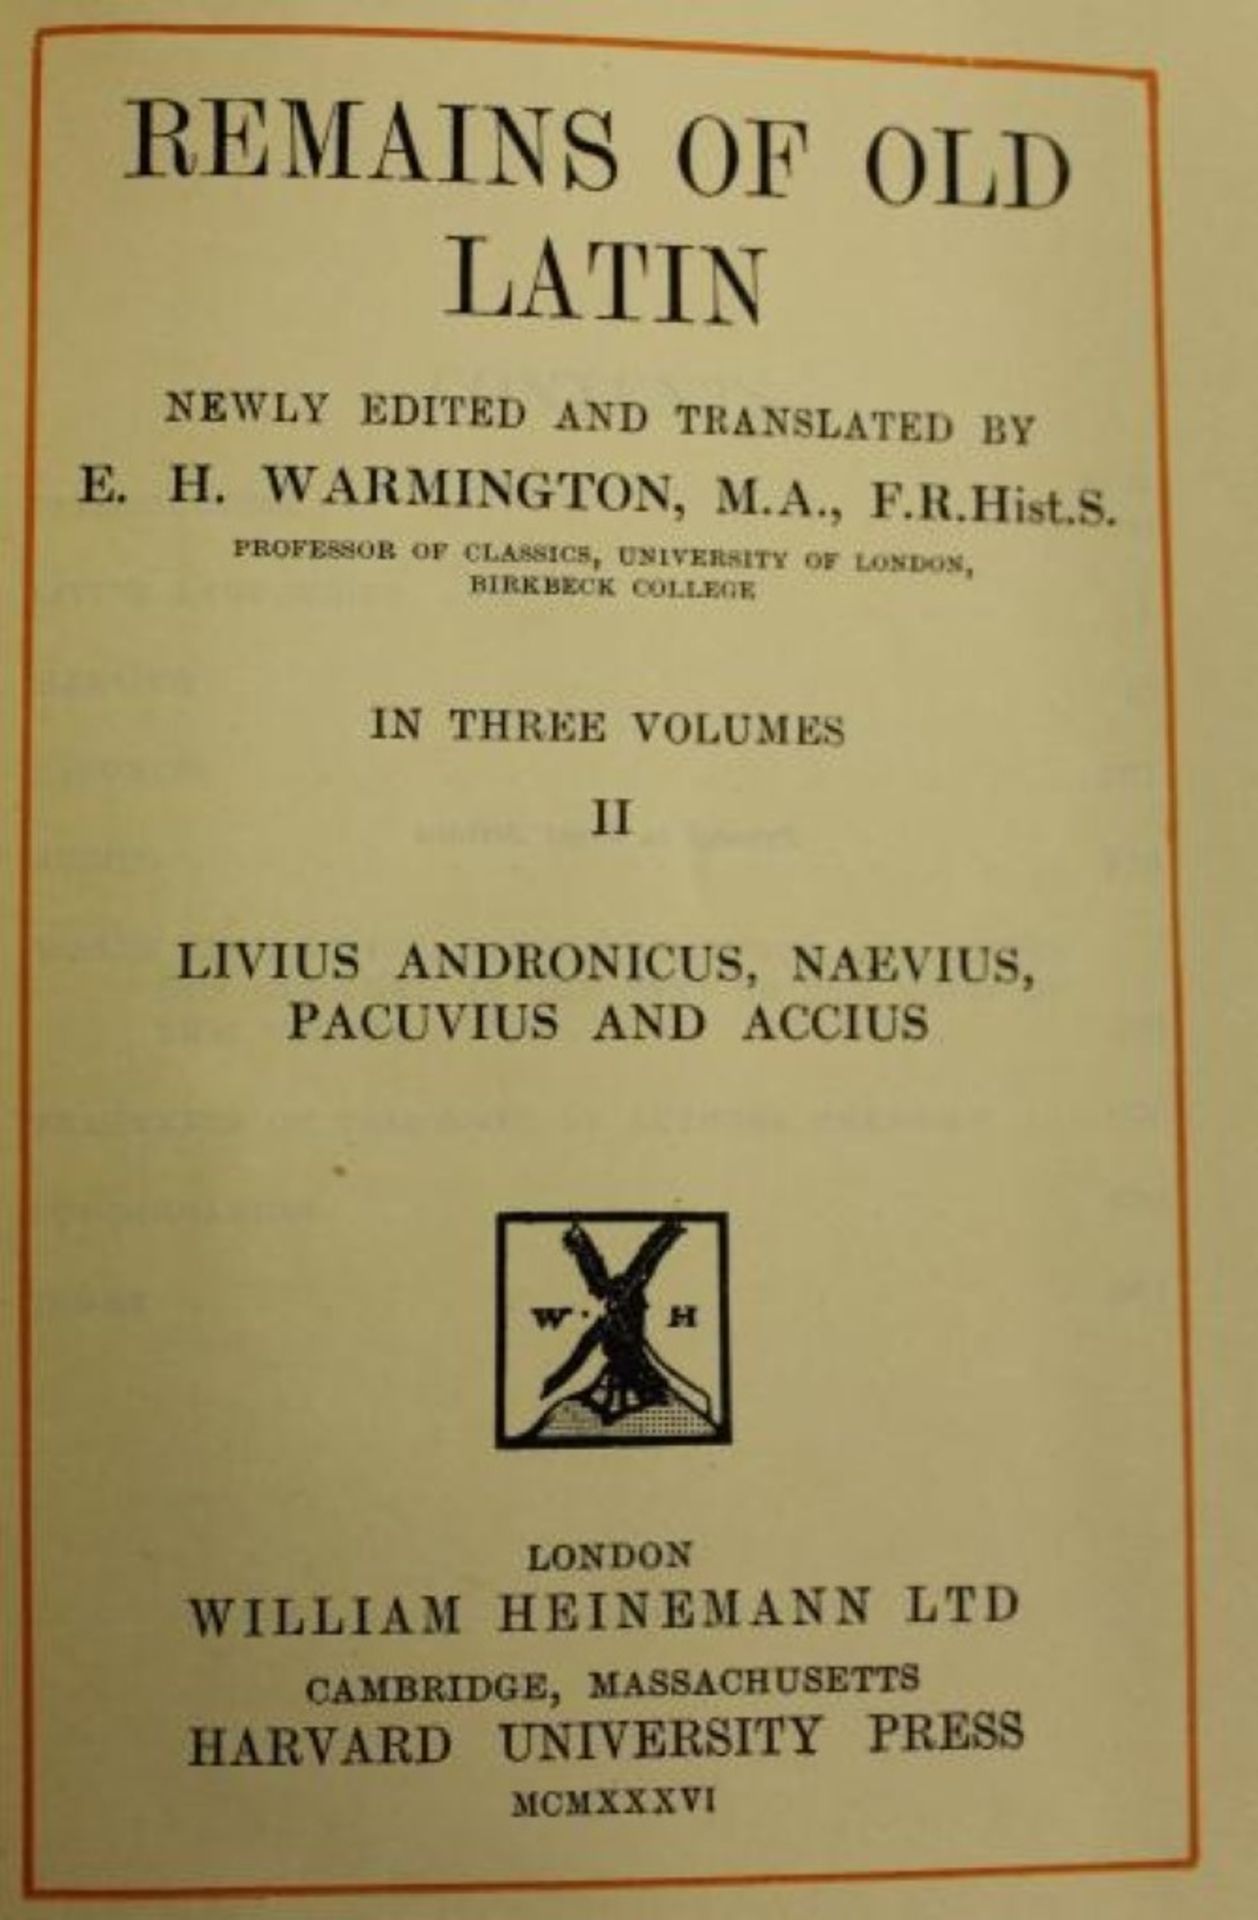 E. H. Warmington, "Remains of Old Latin" 4 Bände, Cambridge, London 1935, mit Altersspuren, Einbänd - Image 4 of 5